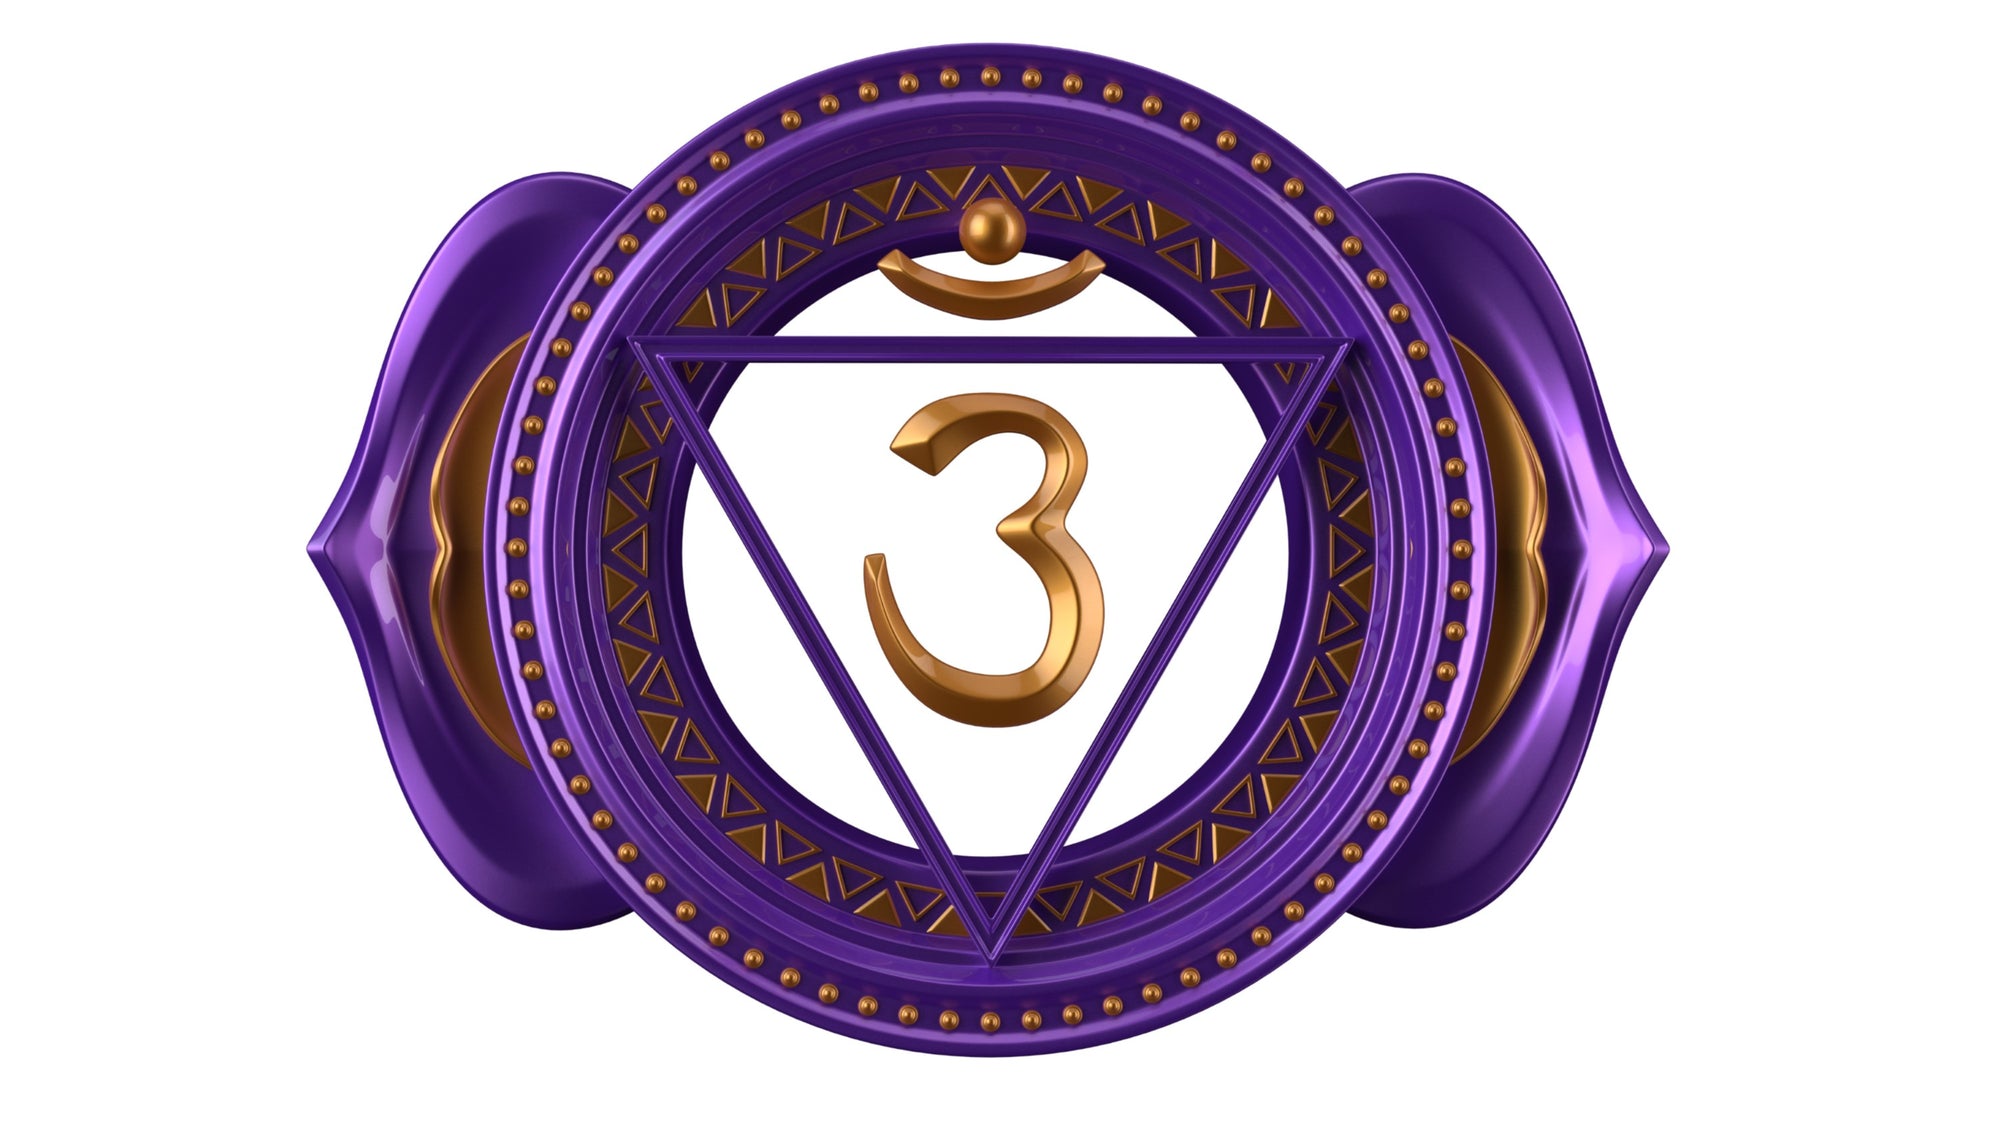 Image of the third eye or ajna chakra symbol